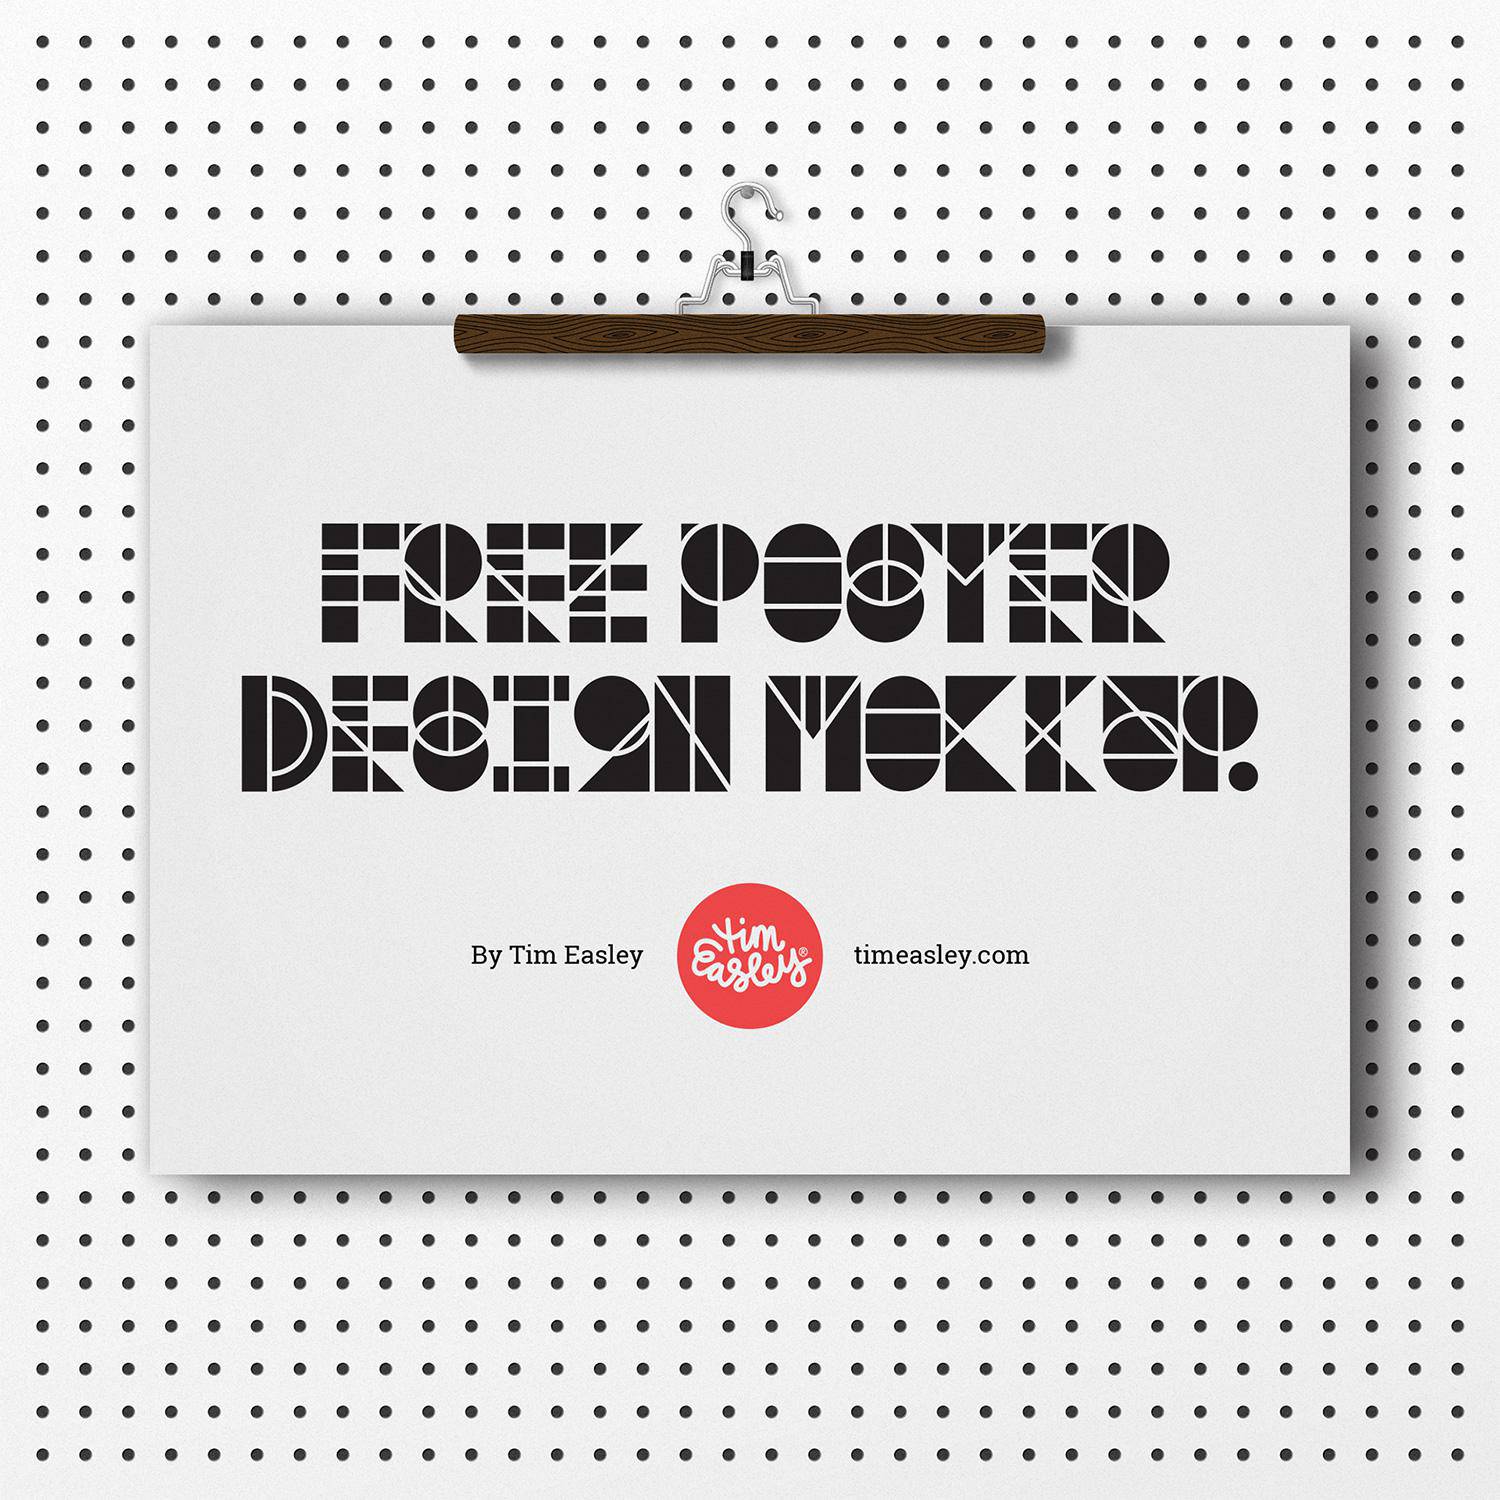 Free-Poster-Design-Mockup-2